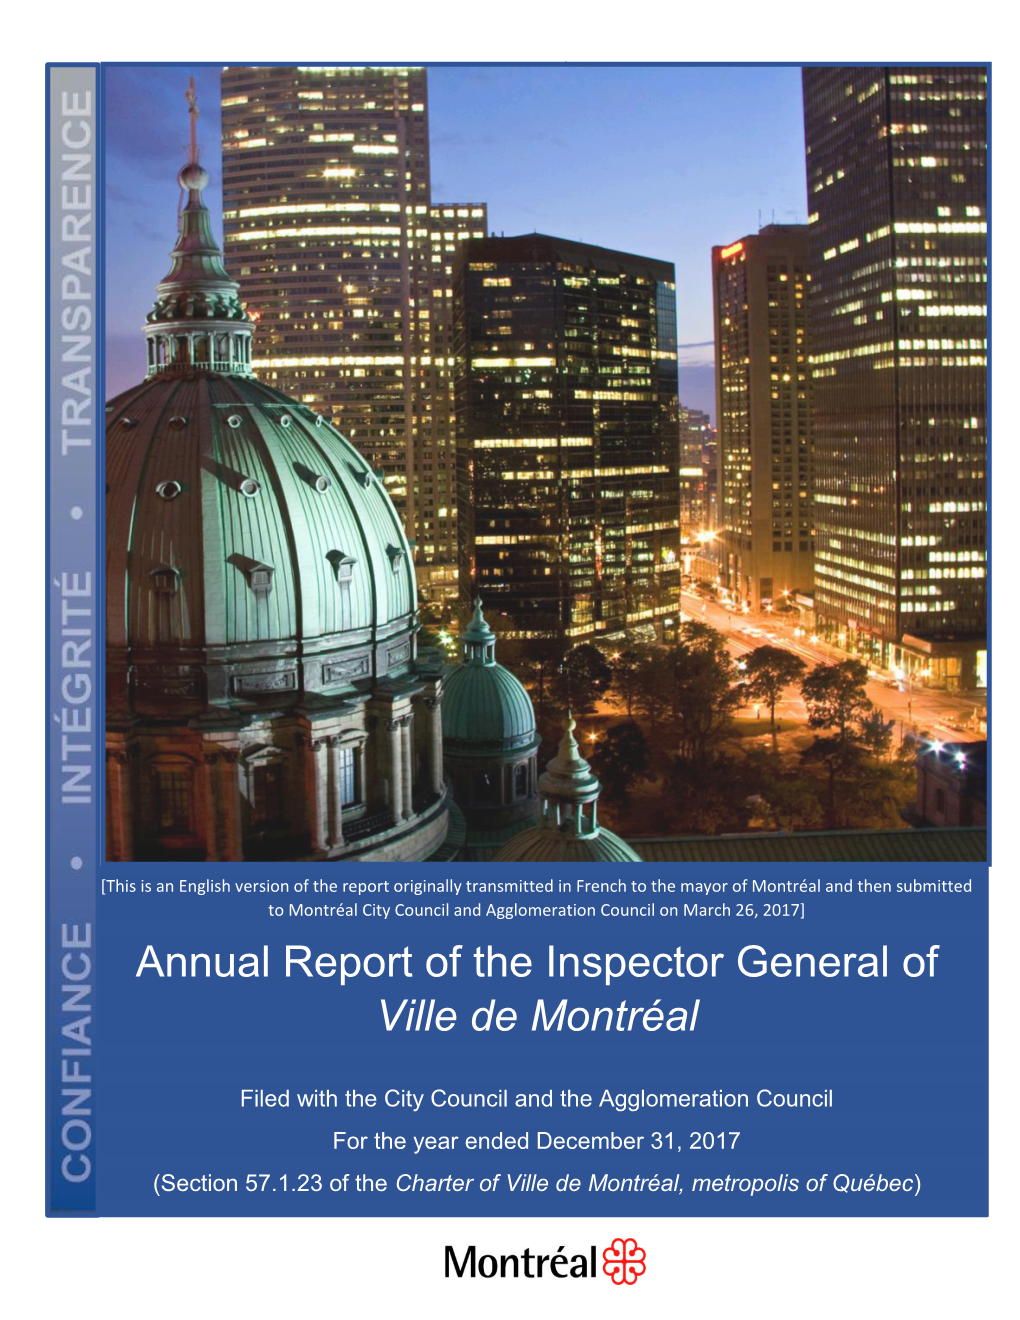 Annual Report of the Inspector General of Ville De Montréal